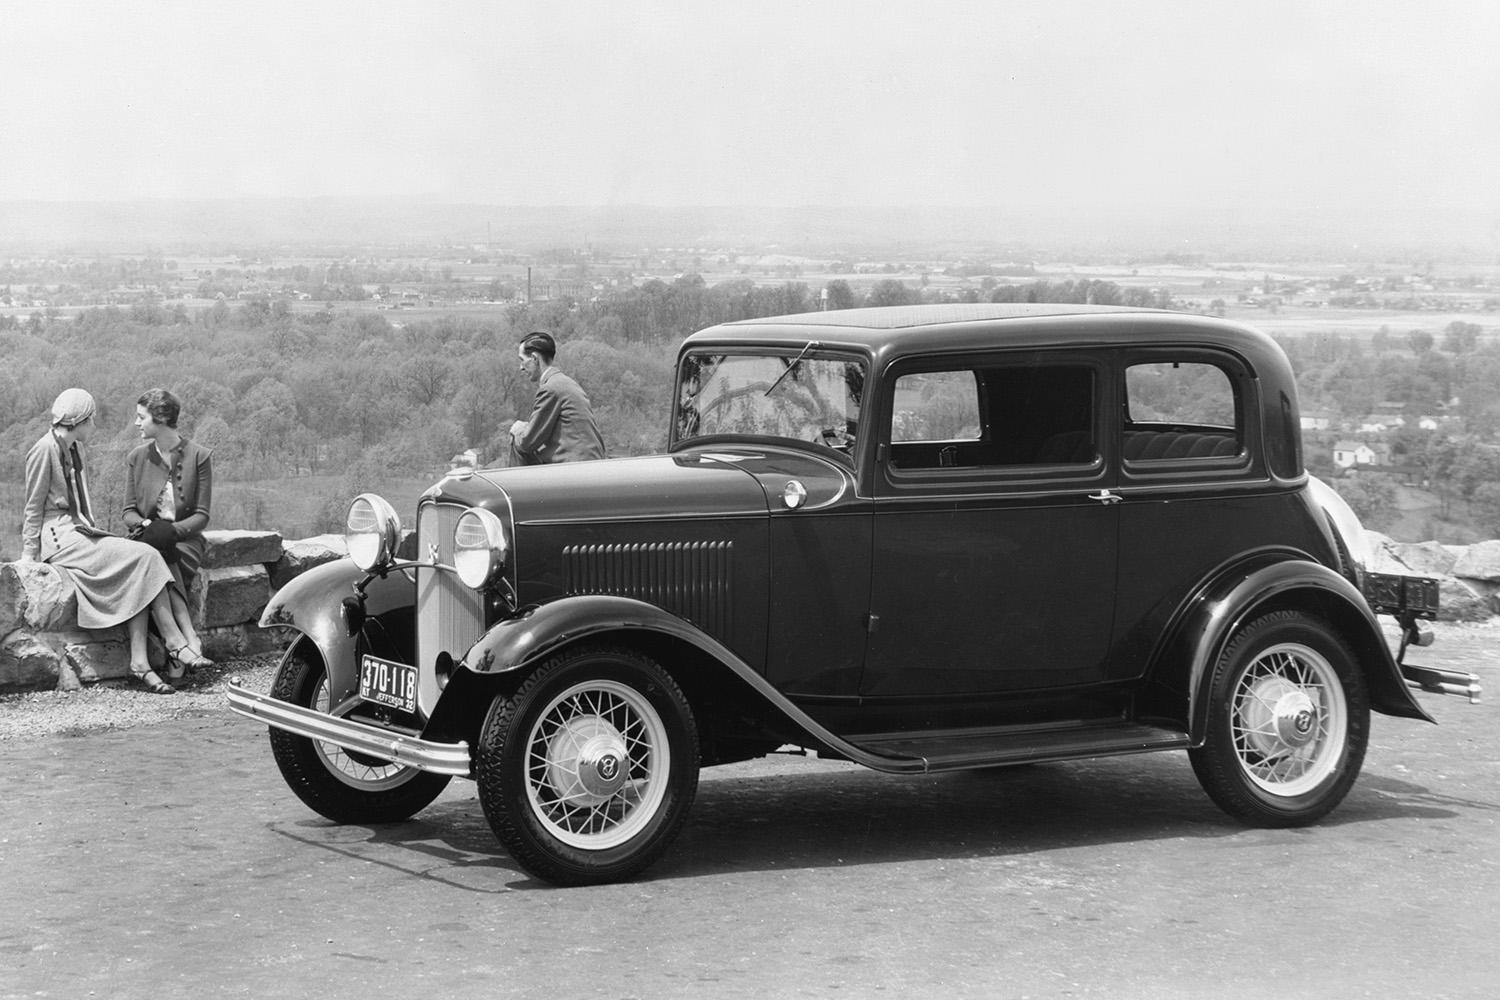 1932-Ford-Victoria-2-door-model-B190-neg-57283-12